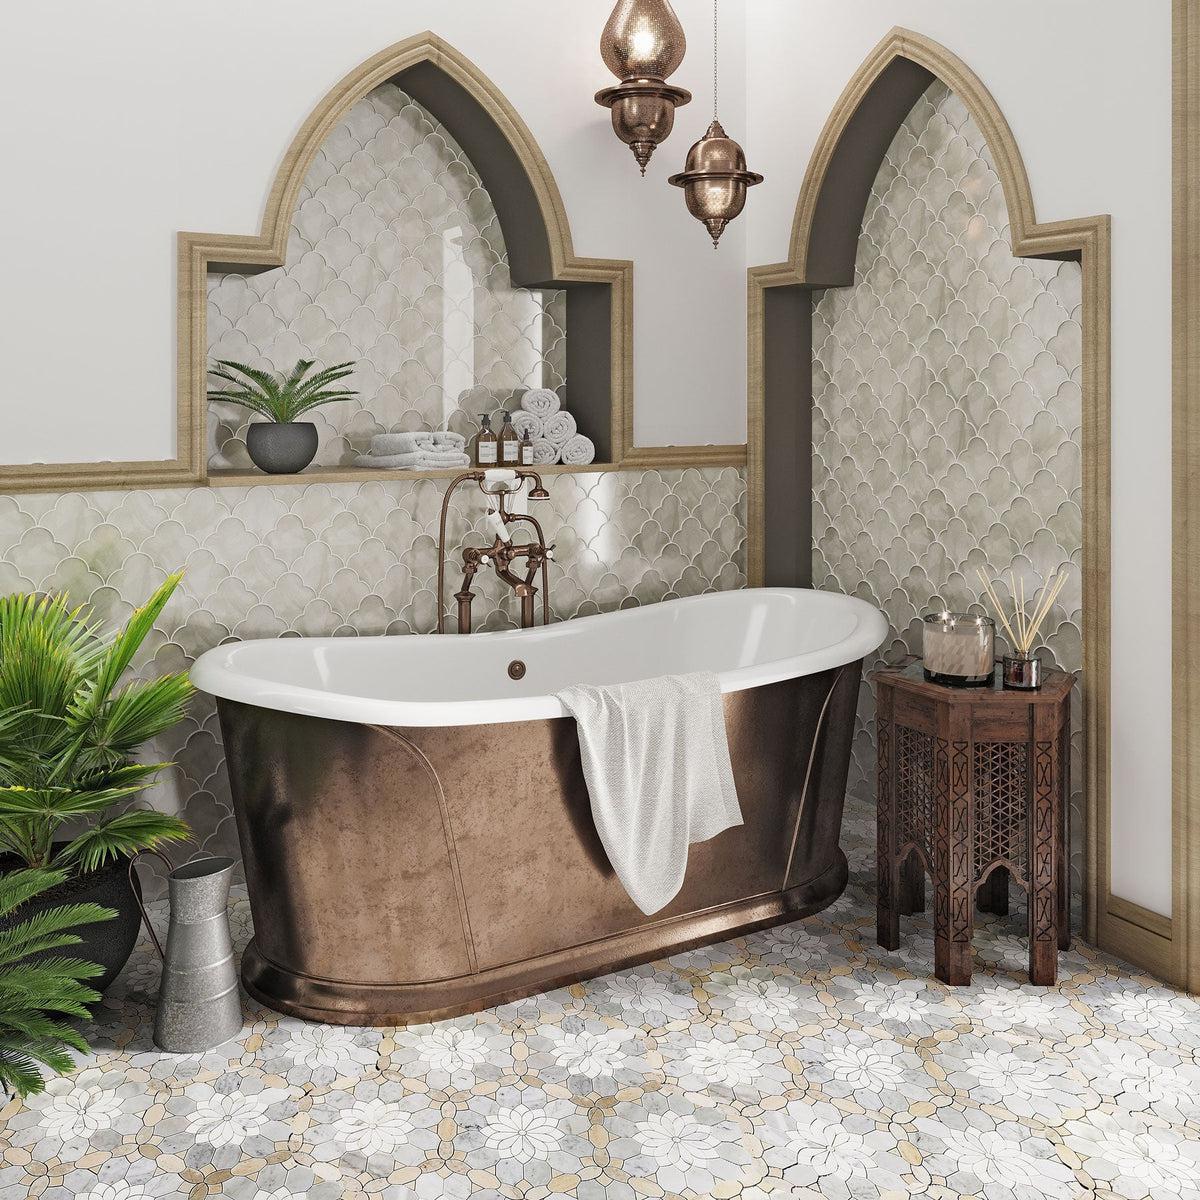 Mediterranean bathroom decor with glass tile wall